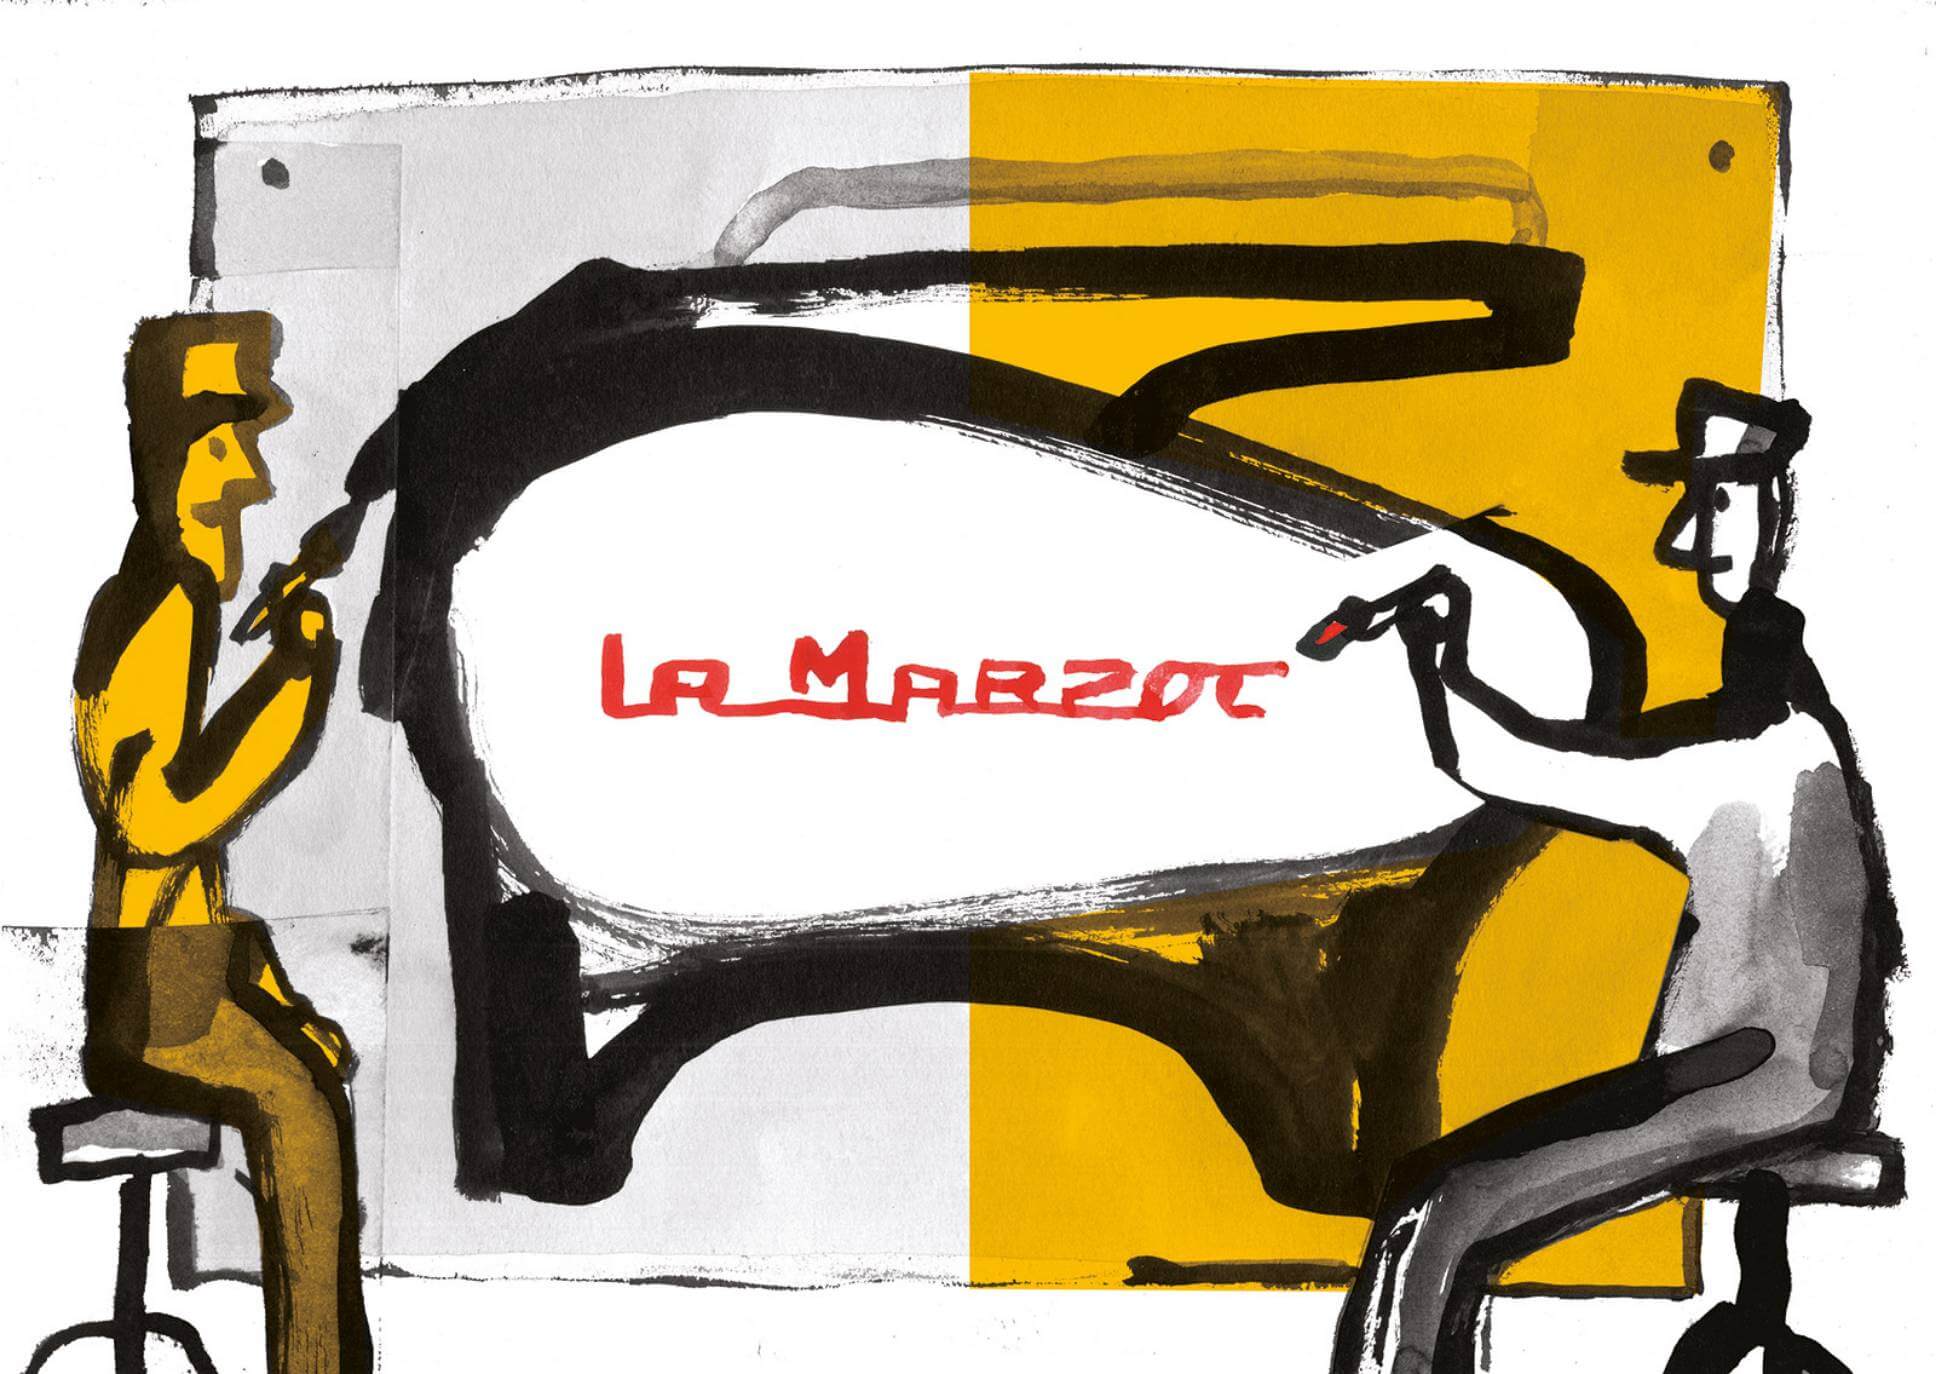 Paining La Marzocco on a machine